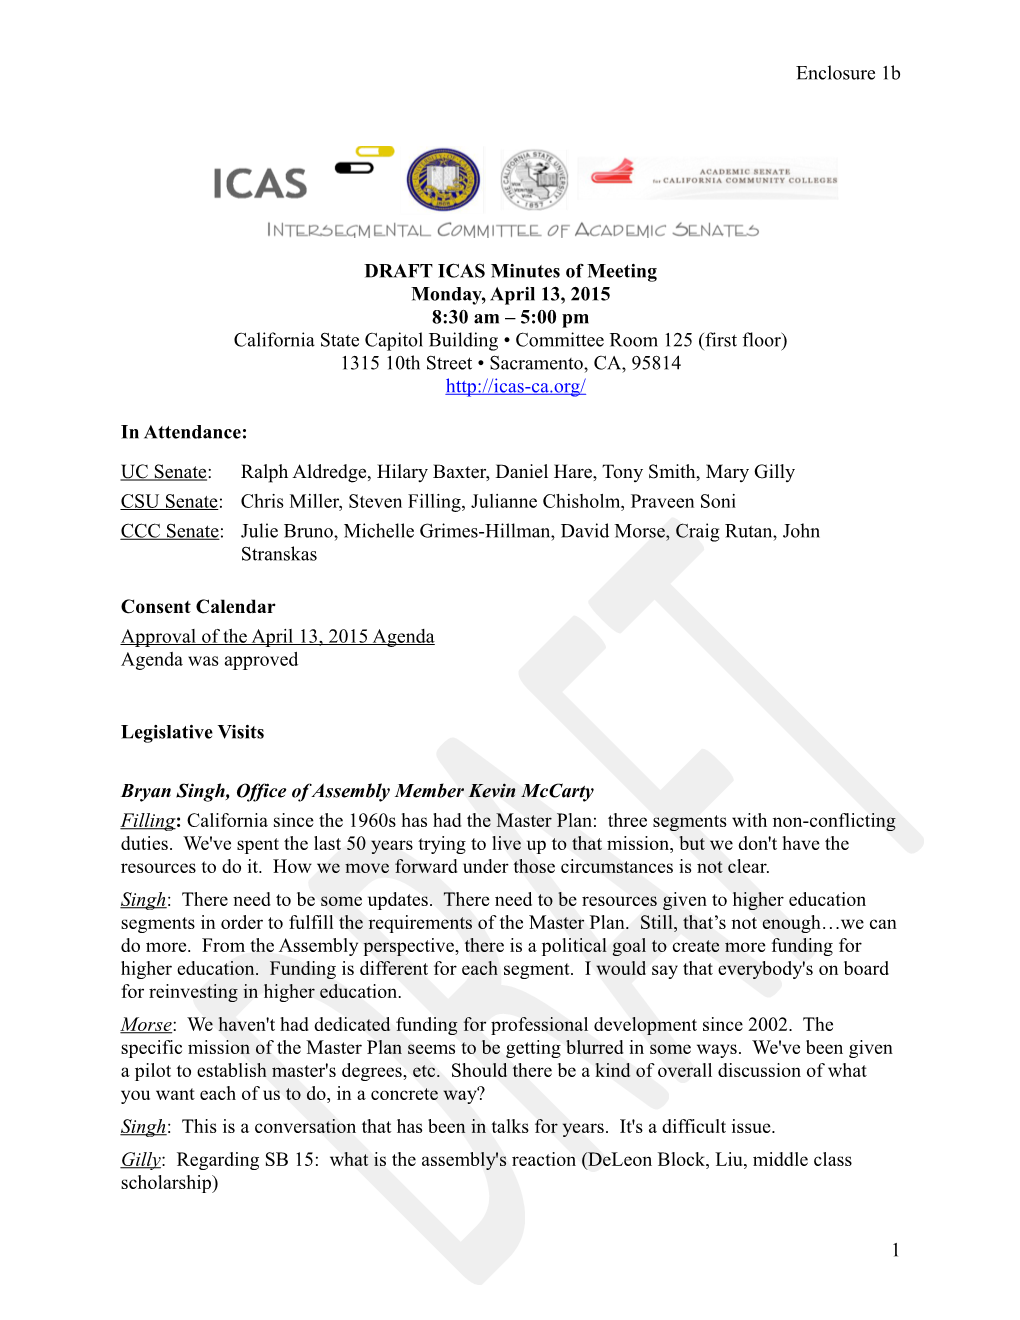 DRAFT ICAS Minutes of Meeting